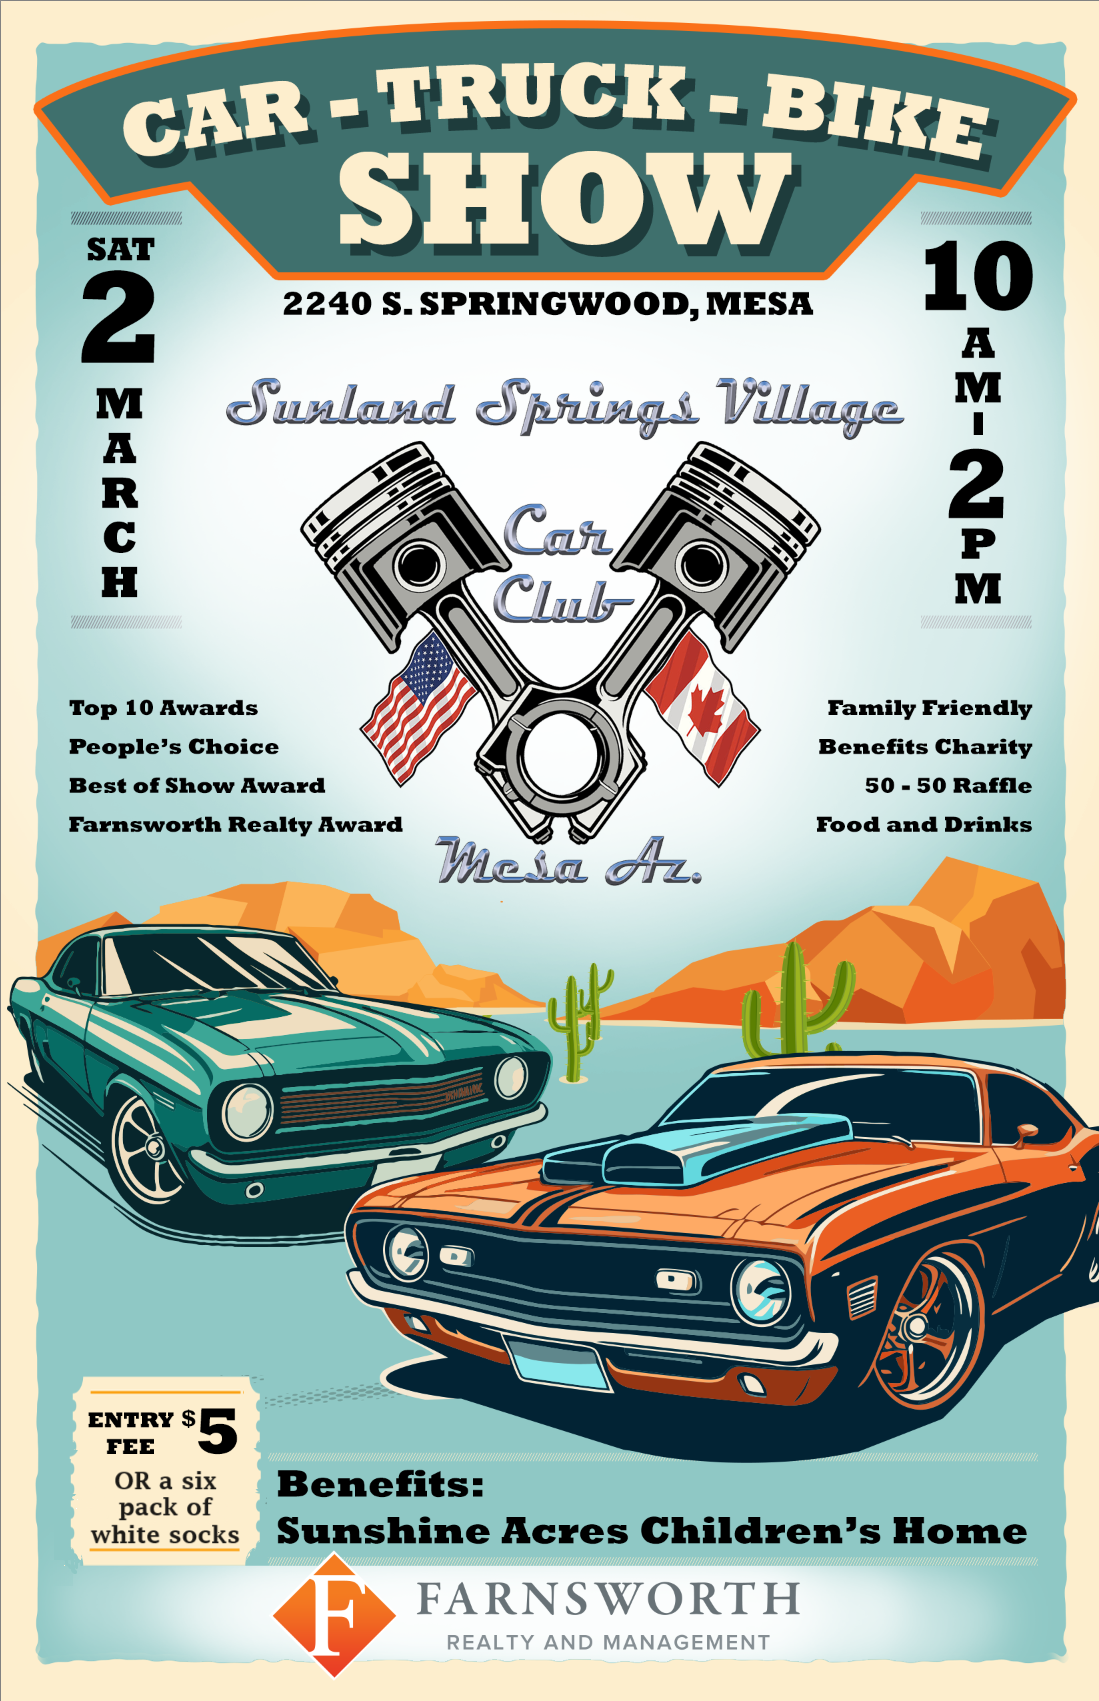 Sunland Springs Village Annual Car Show